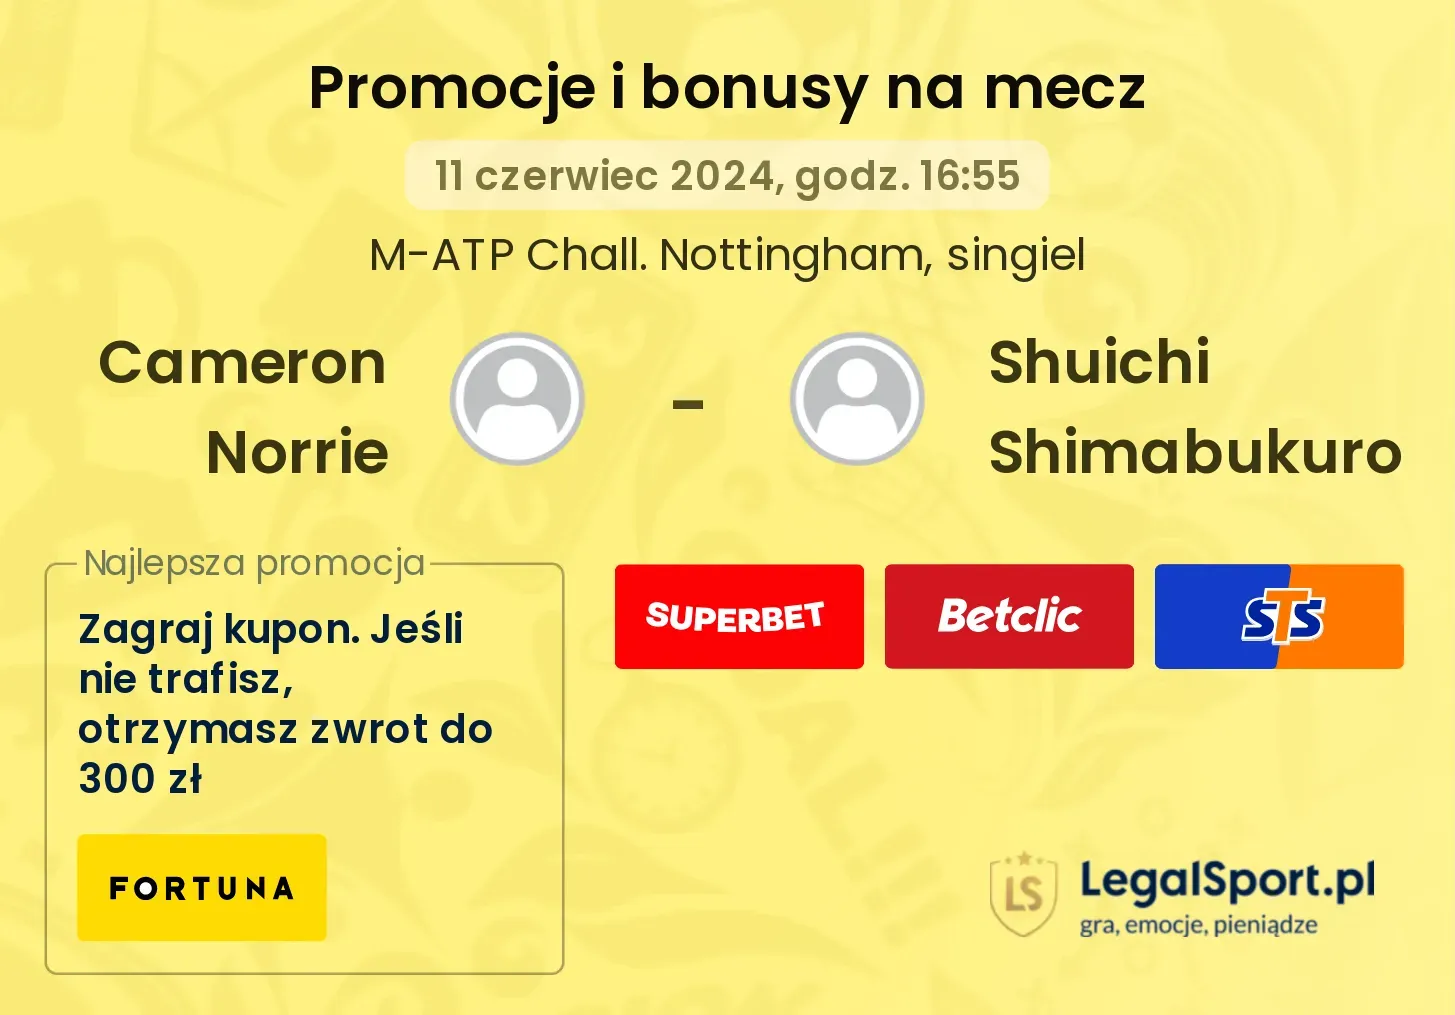 Cameron Norrie - Shuichi Shimabukuro promocje bonusy na mecz